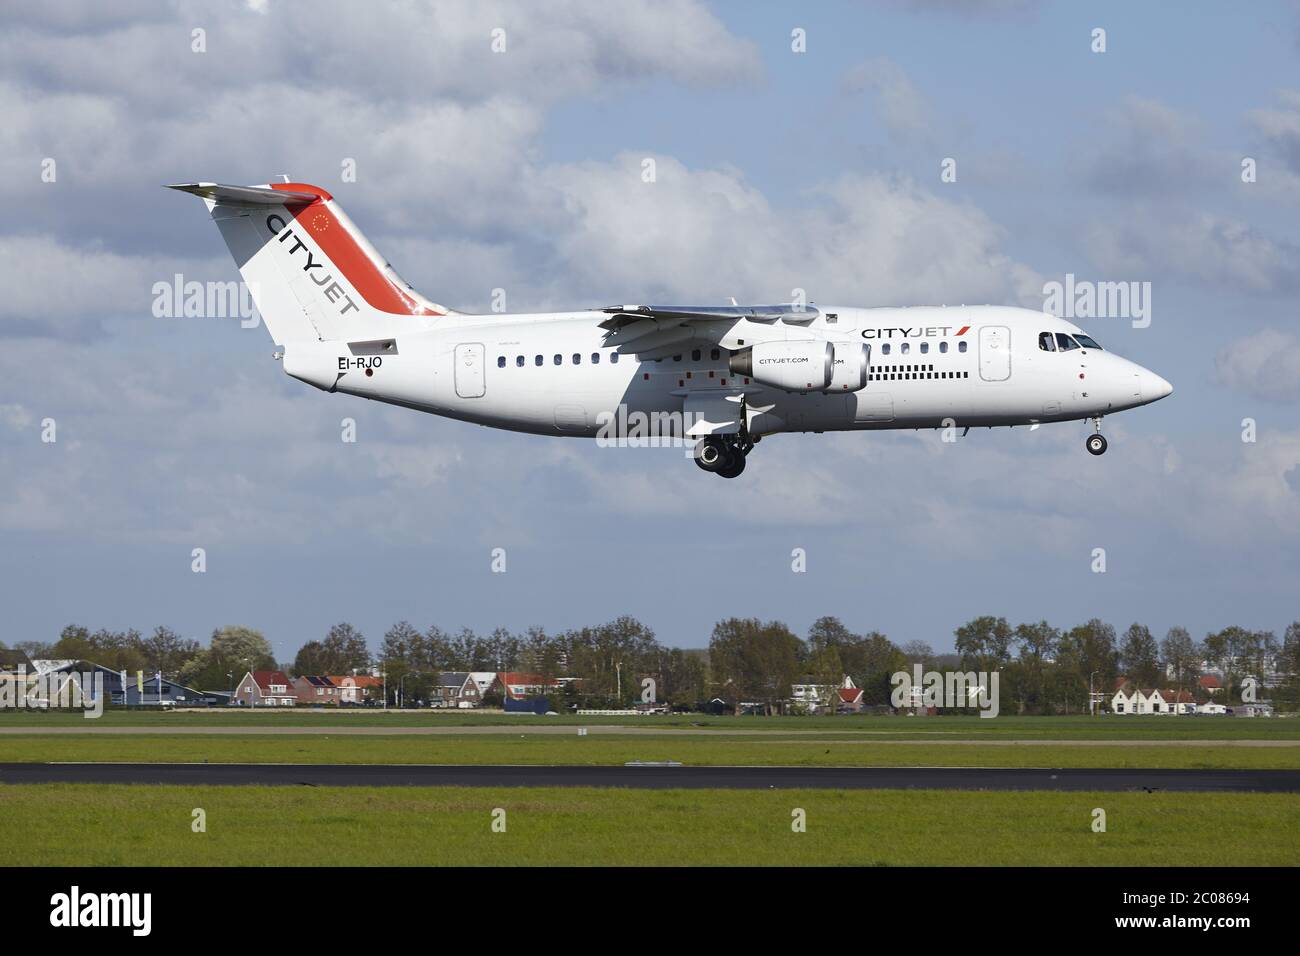 Aeropuerto Schiphol de Ámsterdam - Avro RJ85 desde CityJet lands Foto de stock